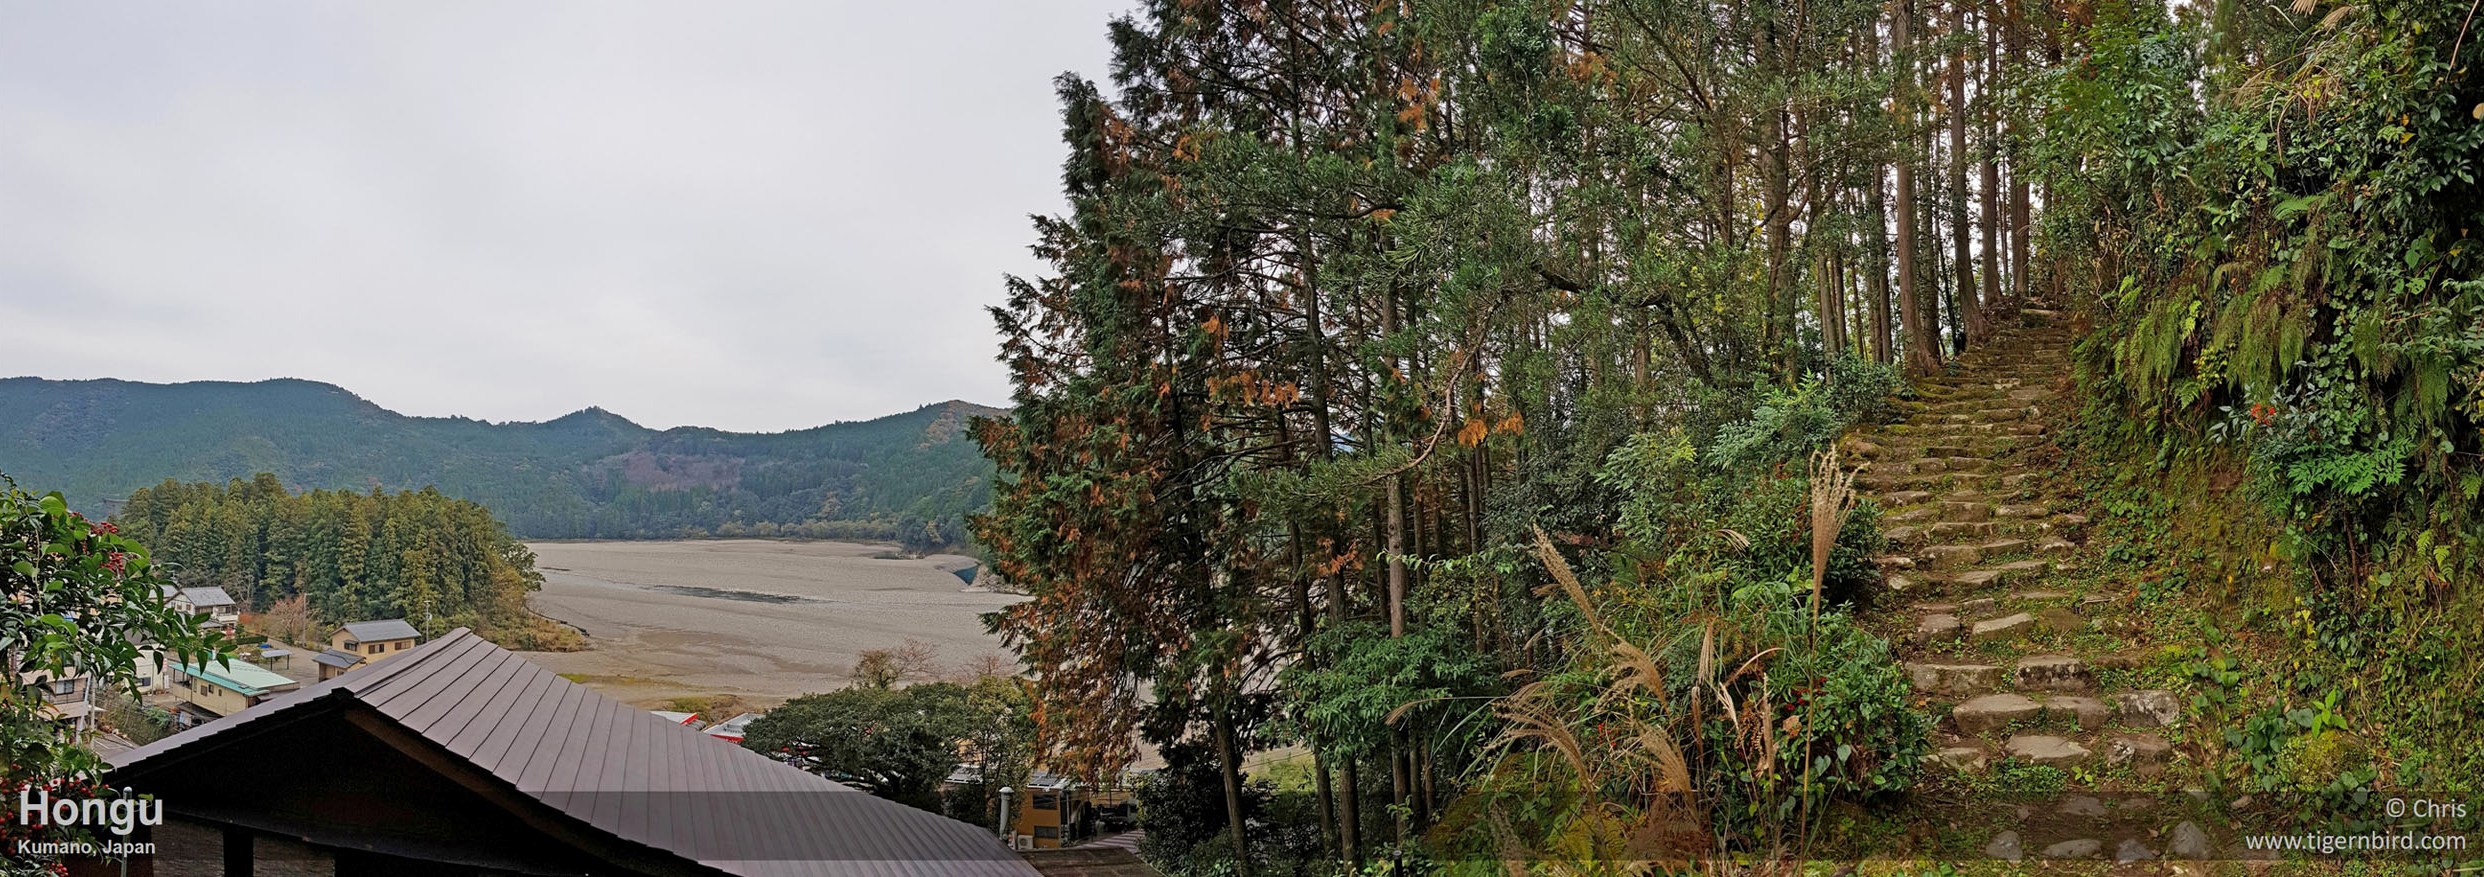 Mossy Kumano Kodo trail on steep hillside to town and stony Kumano riverbed in Japan